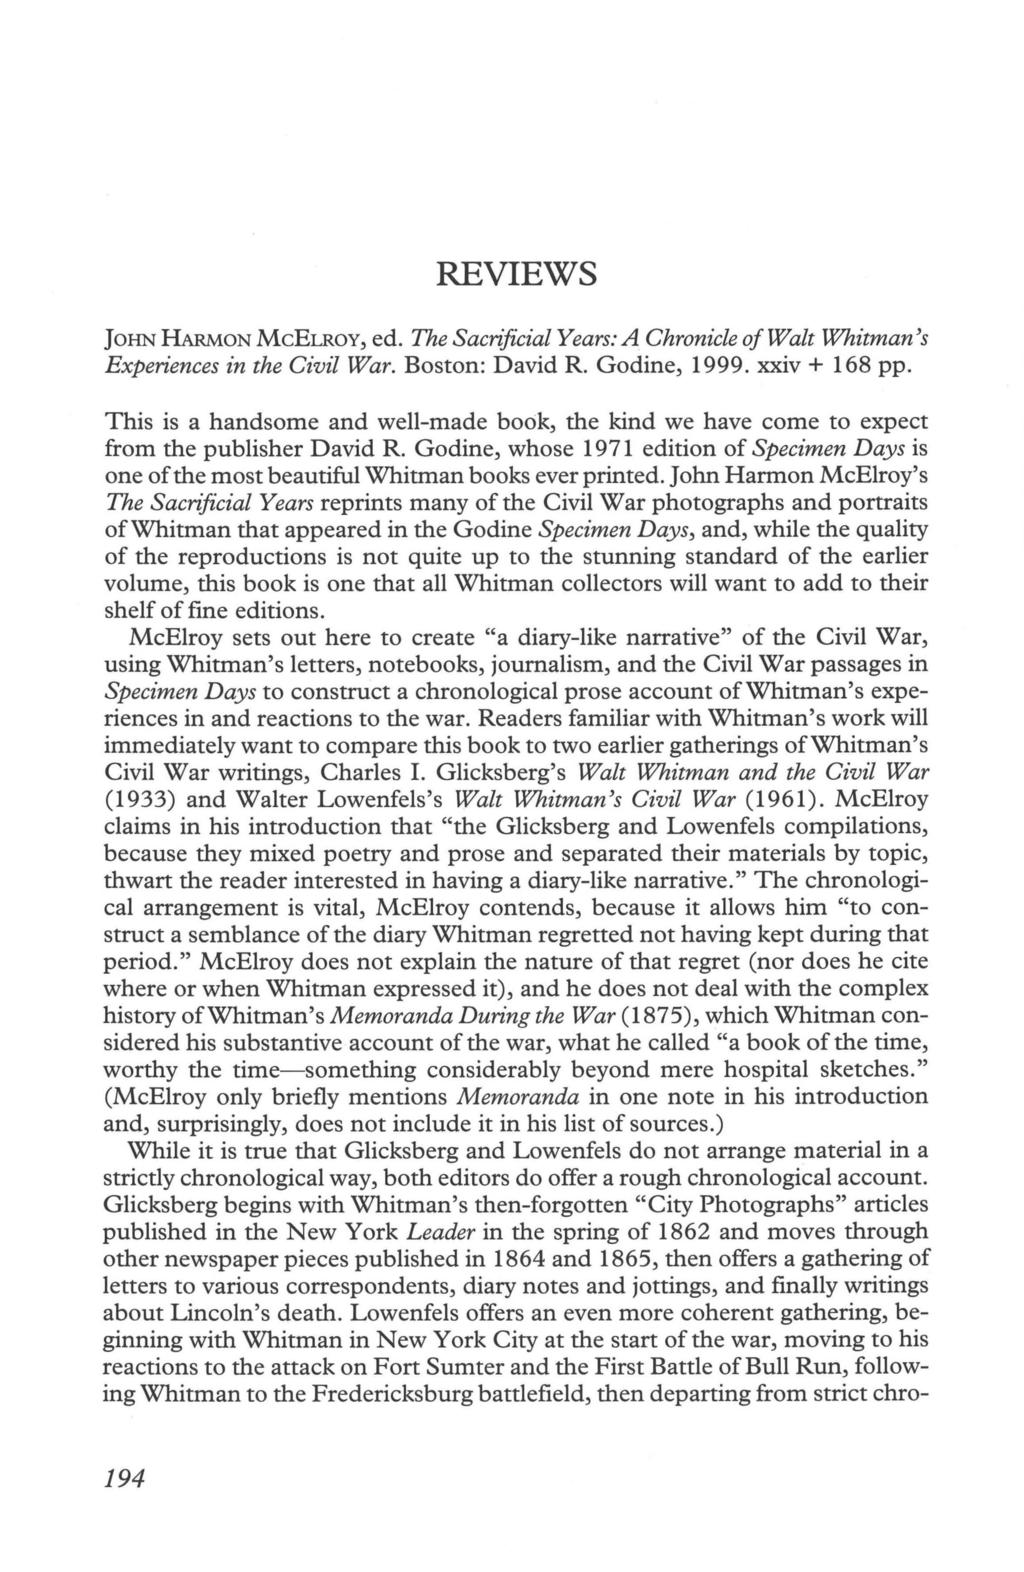 REVIEWS JOHN HARMON MCELROY, ed. The Sacrificial Years: A Chronicle of Walt Whitman's Experiences in the Civil War. Boston: David R. Godine, 1999. xxiv + 168 pp.